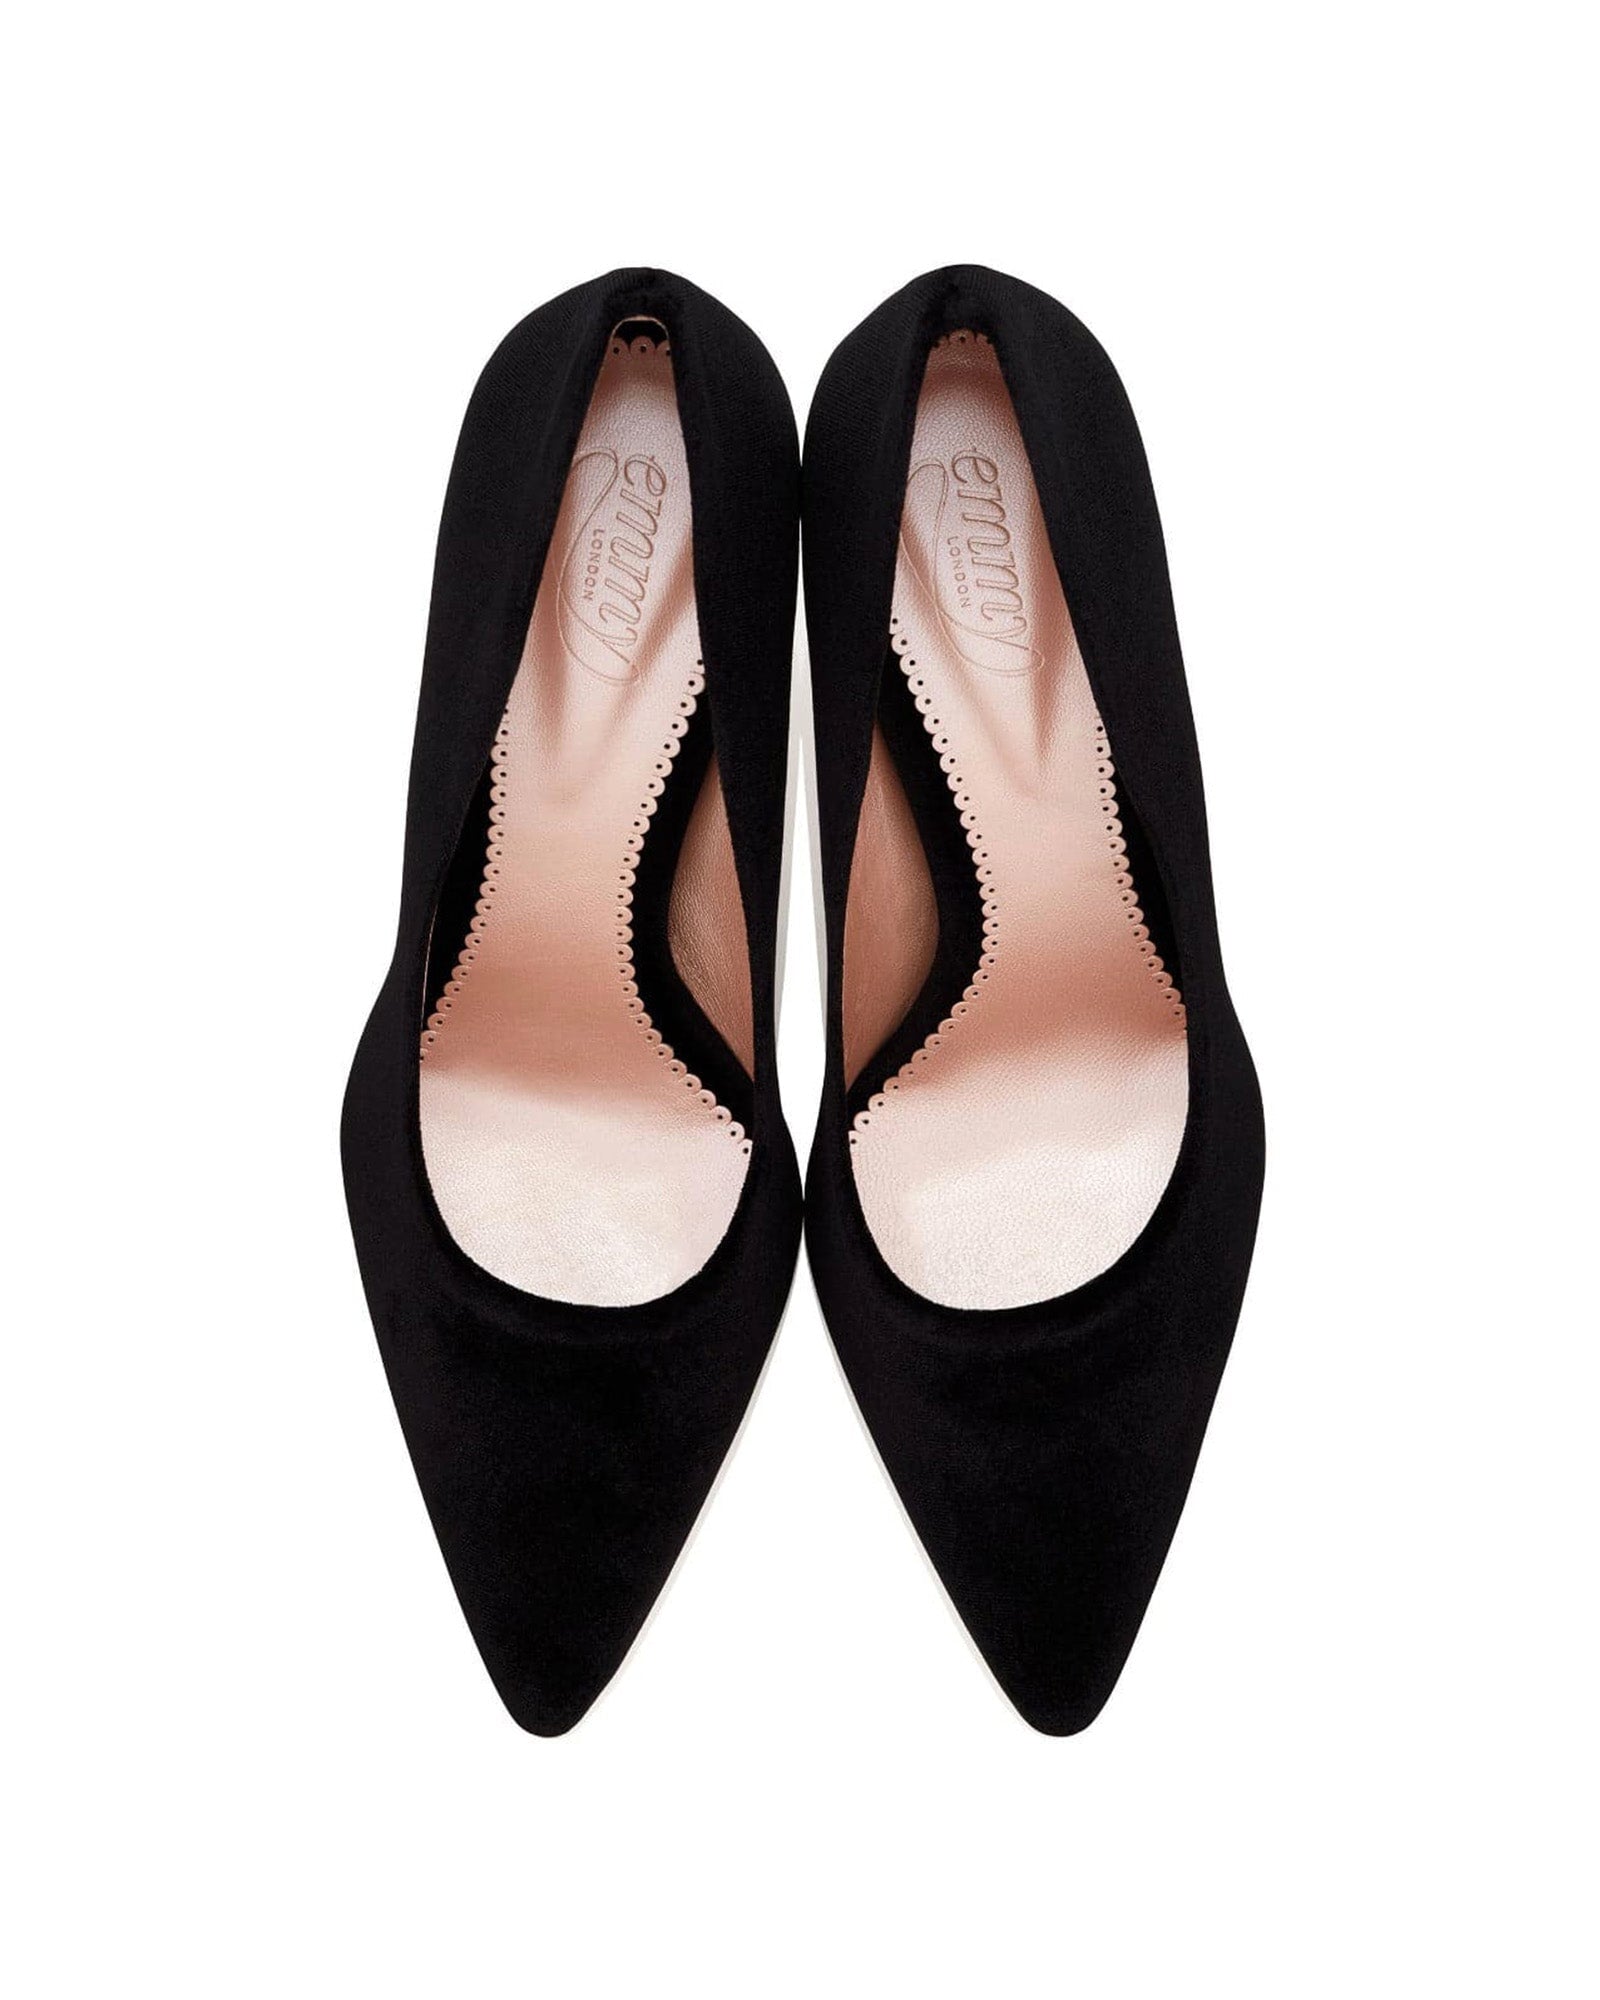 Claudia Velvet Jet Black Fashion Shoe Black Velvet Court Shoe  image